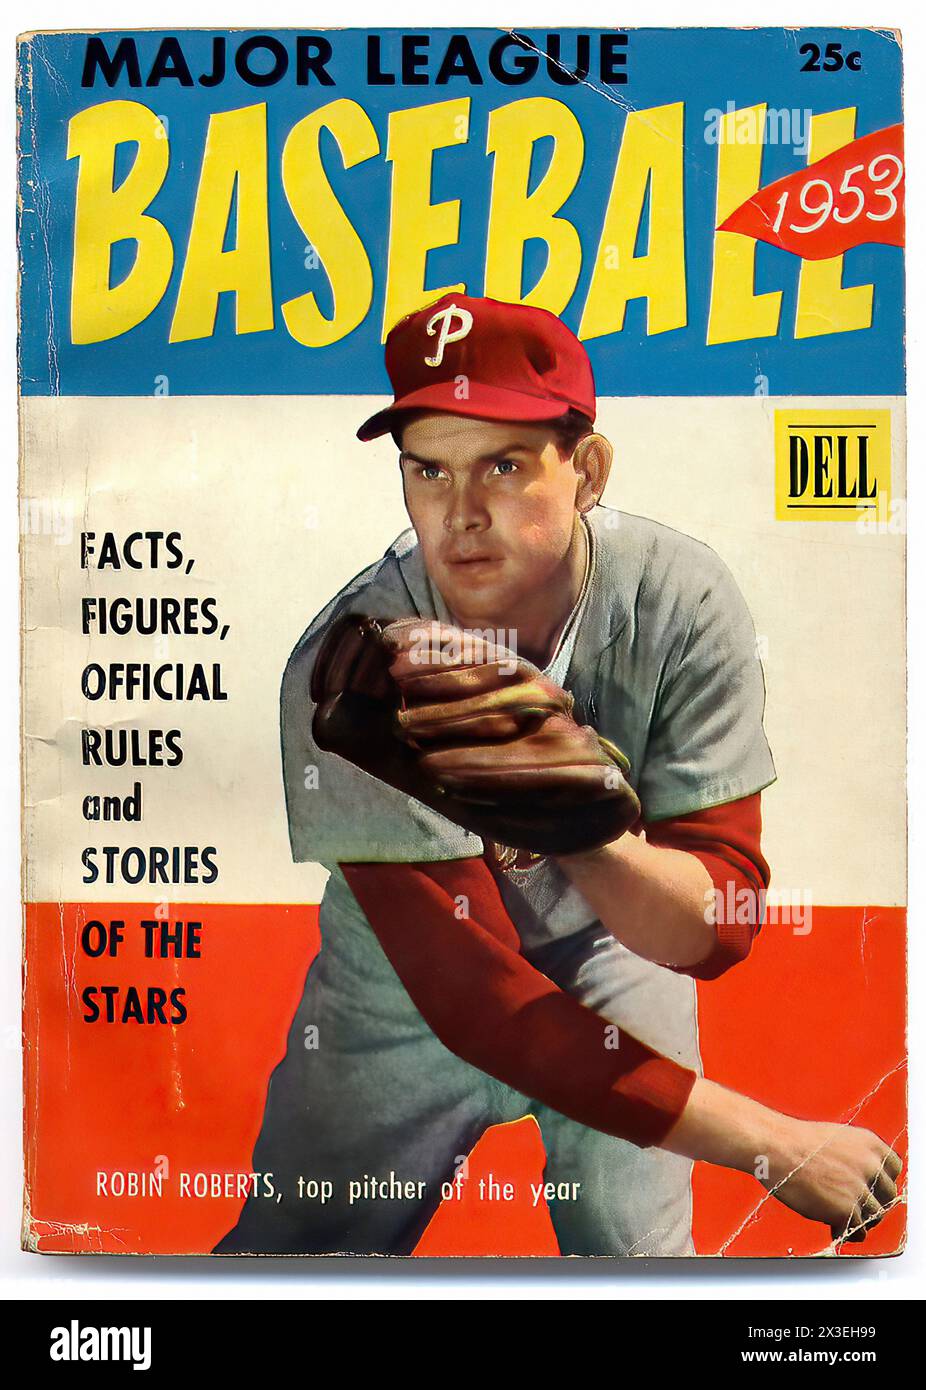 Major League Baseball 1953 - Vintage american illustrated publication cover Stock Photo